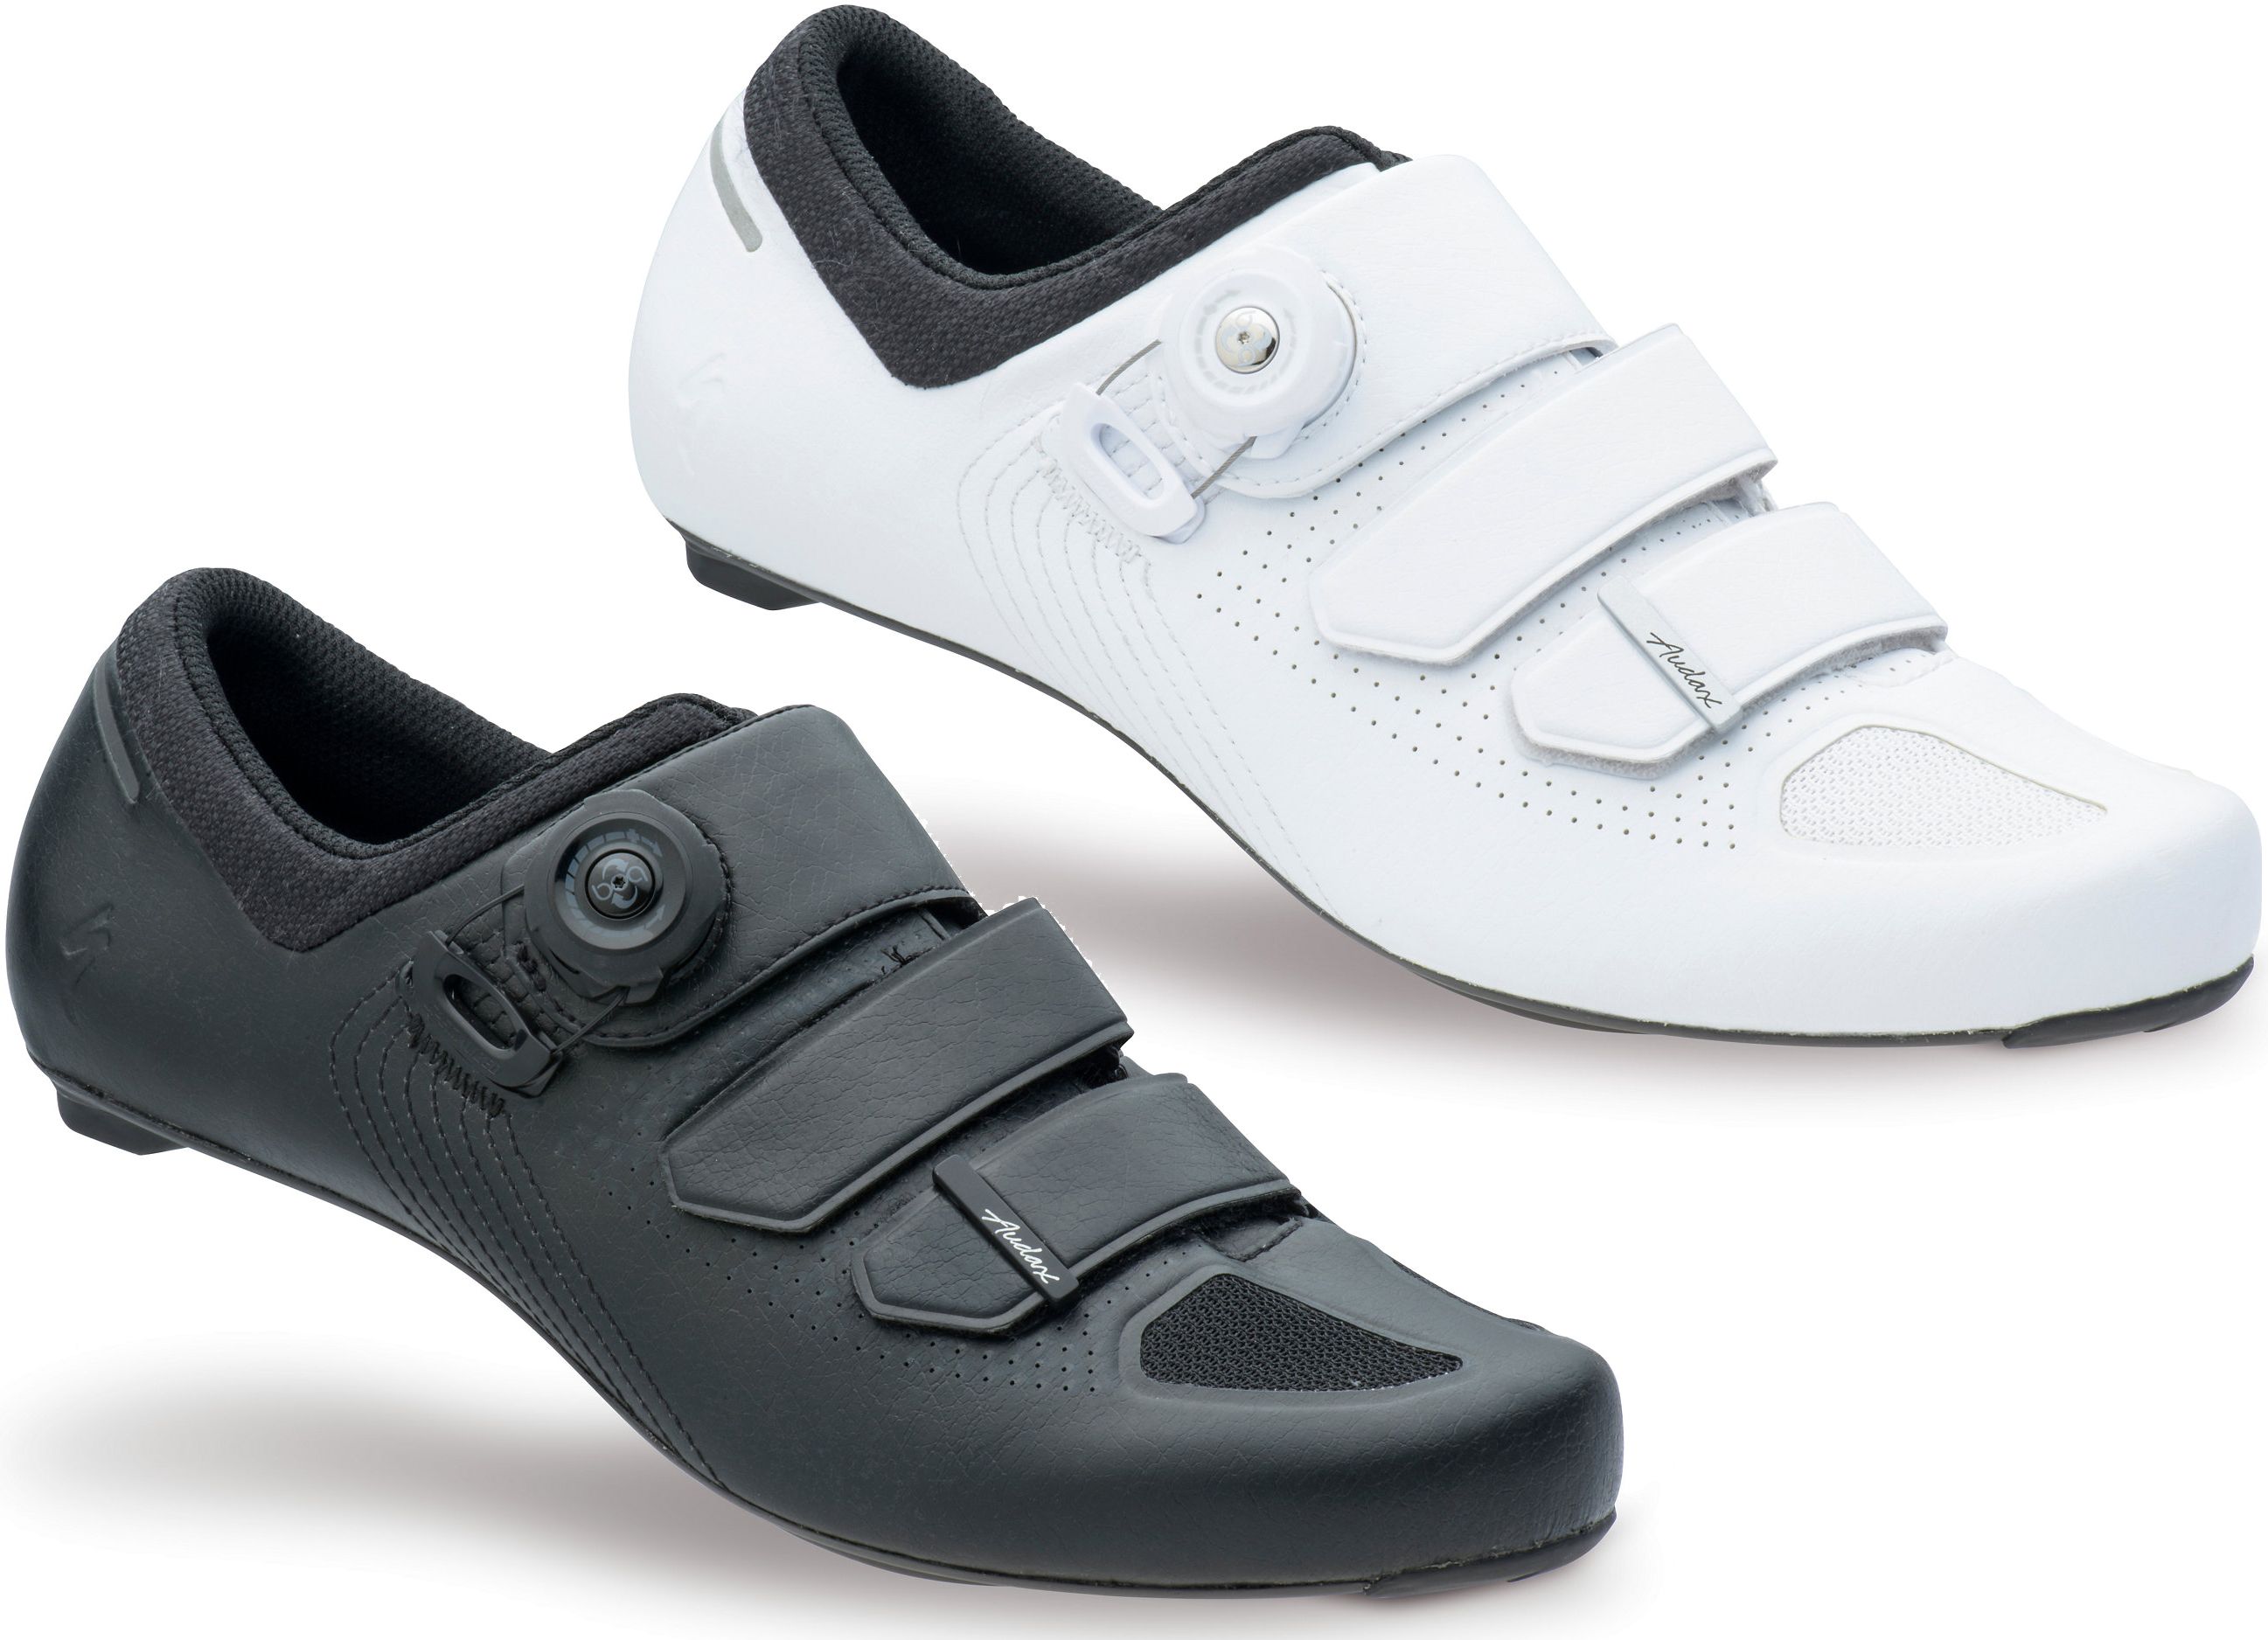 Specialized Audax Road Shoe Size 41 